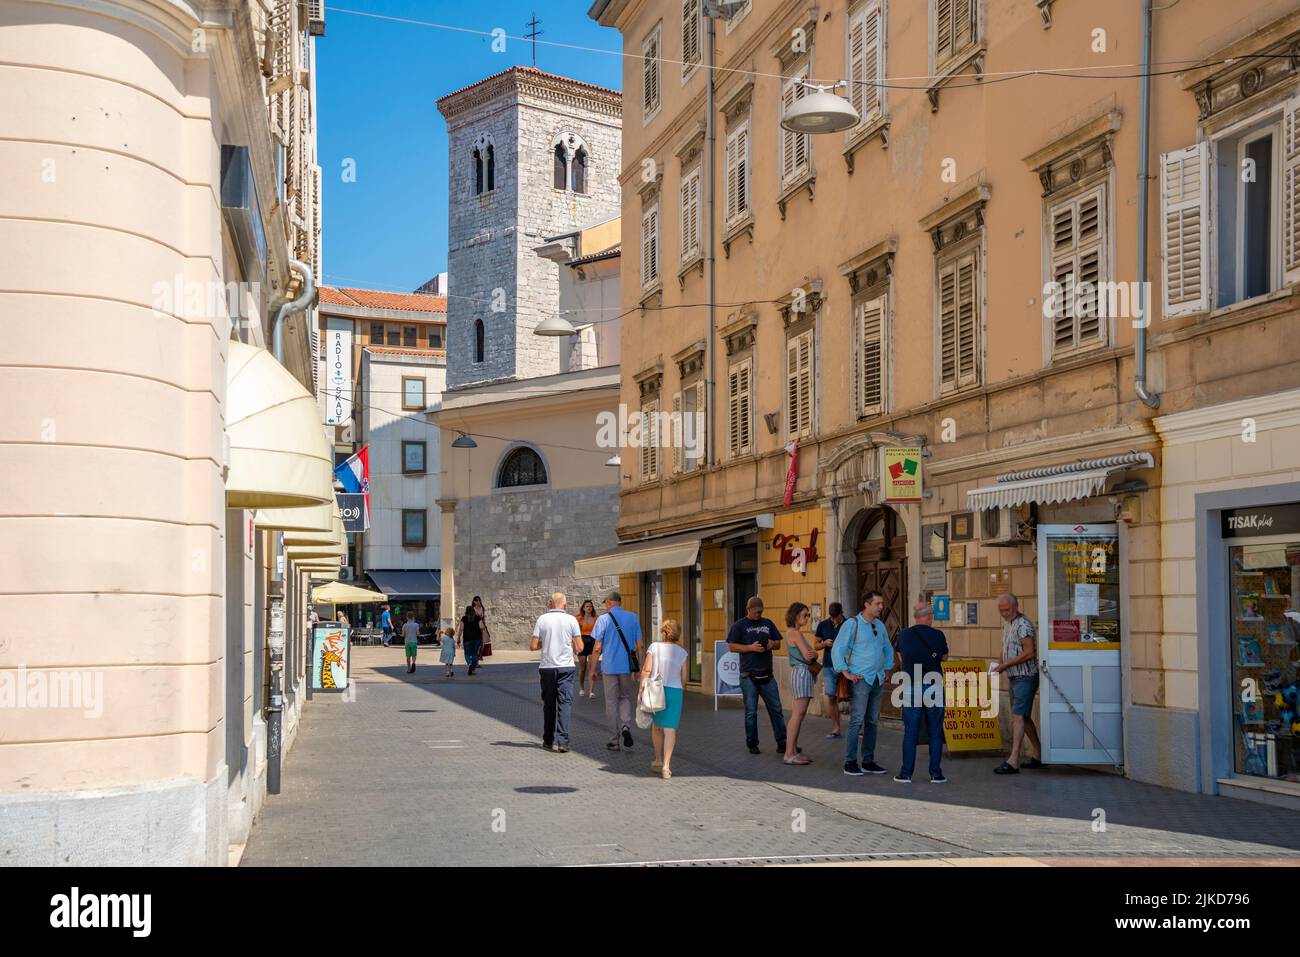 View of shops, people and Leaning Tower on Pul Vele Crikve, Rijeka, Croatia, Europe Stock Photo